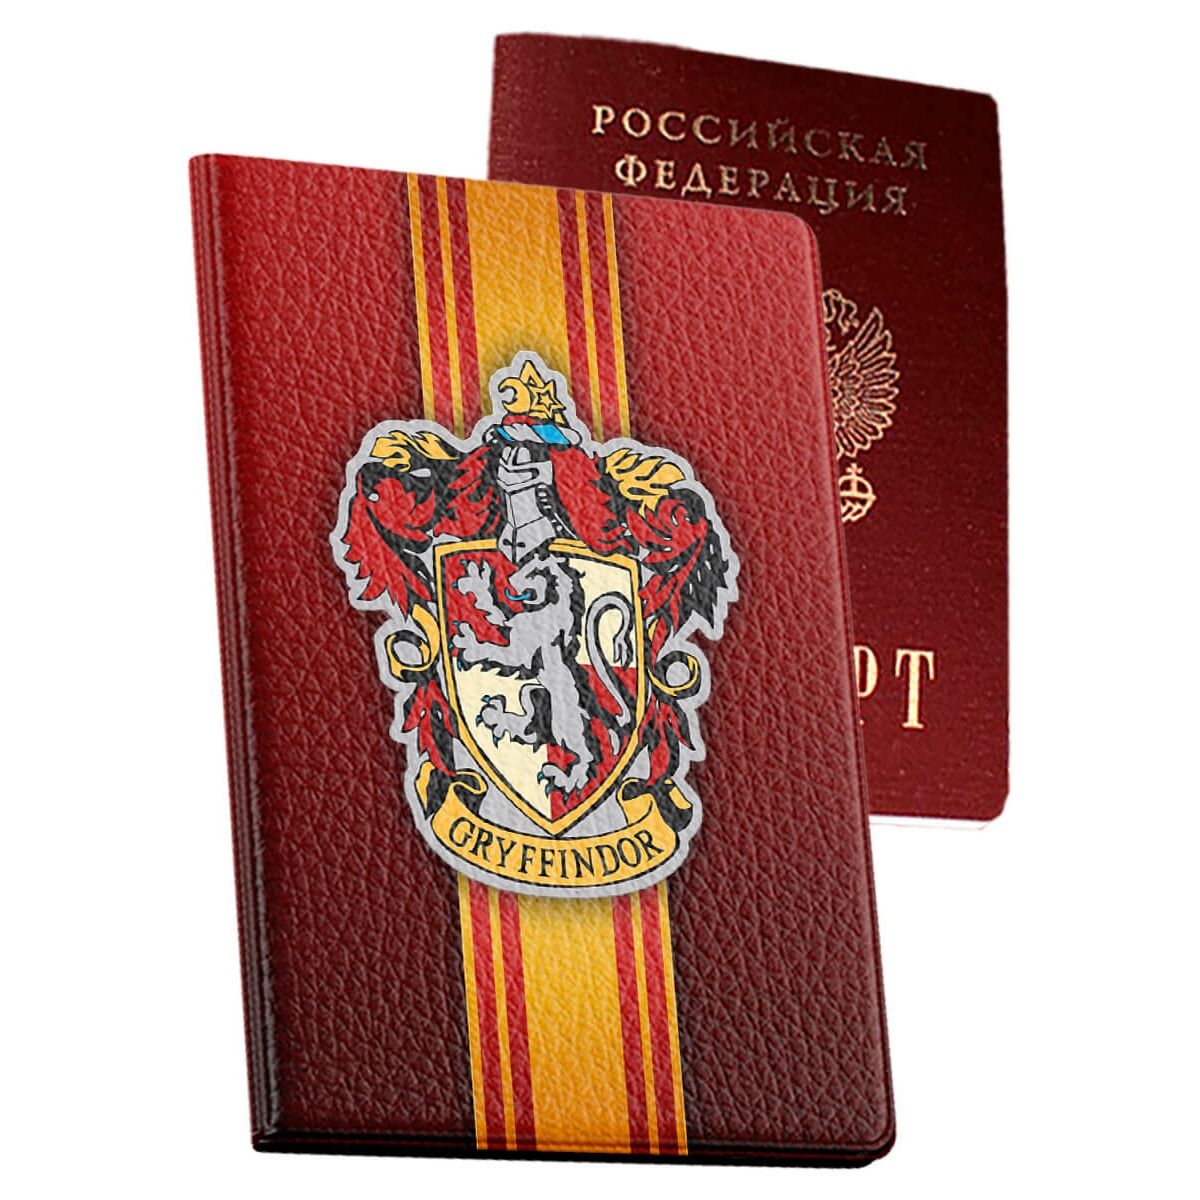 обложка на паспорт дота 2 фото 96